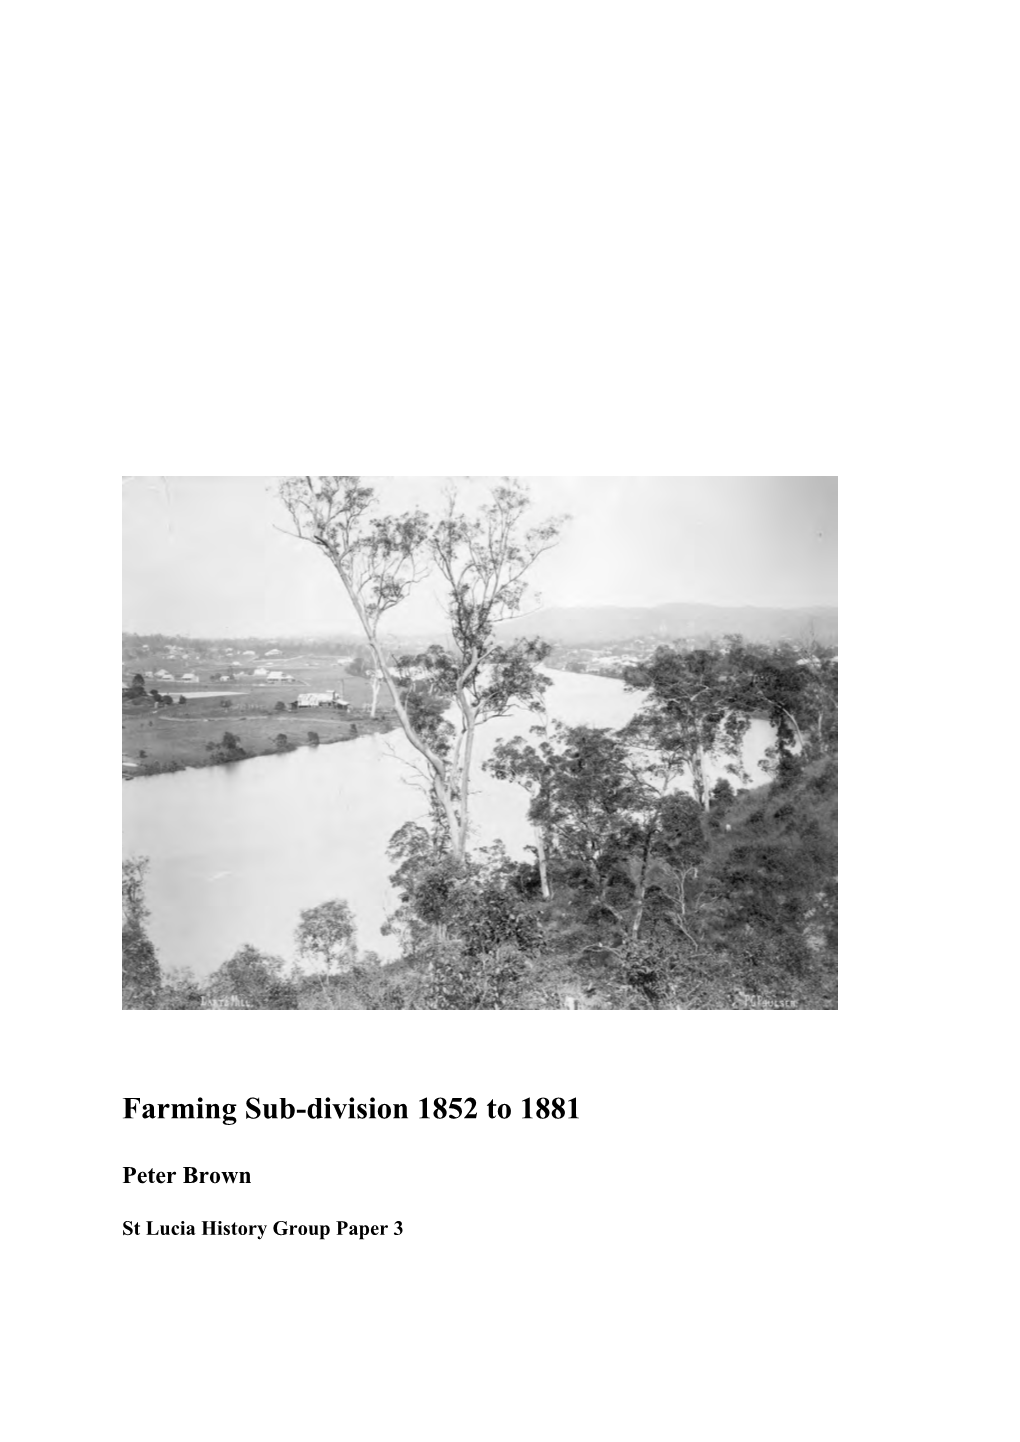 Farming Sub-Division 1852 to 1881